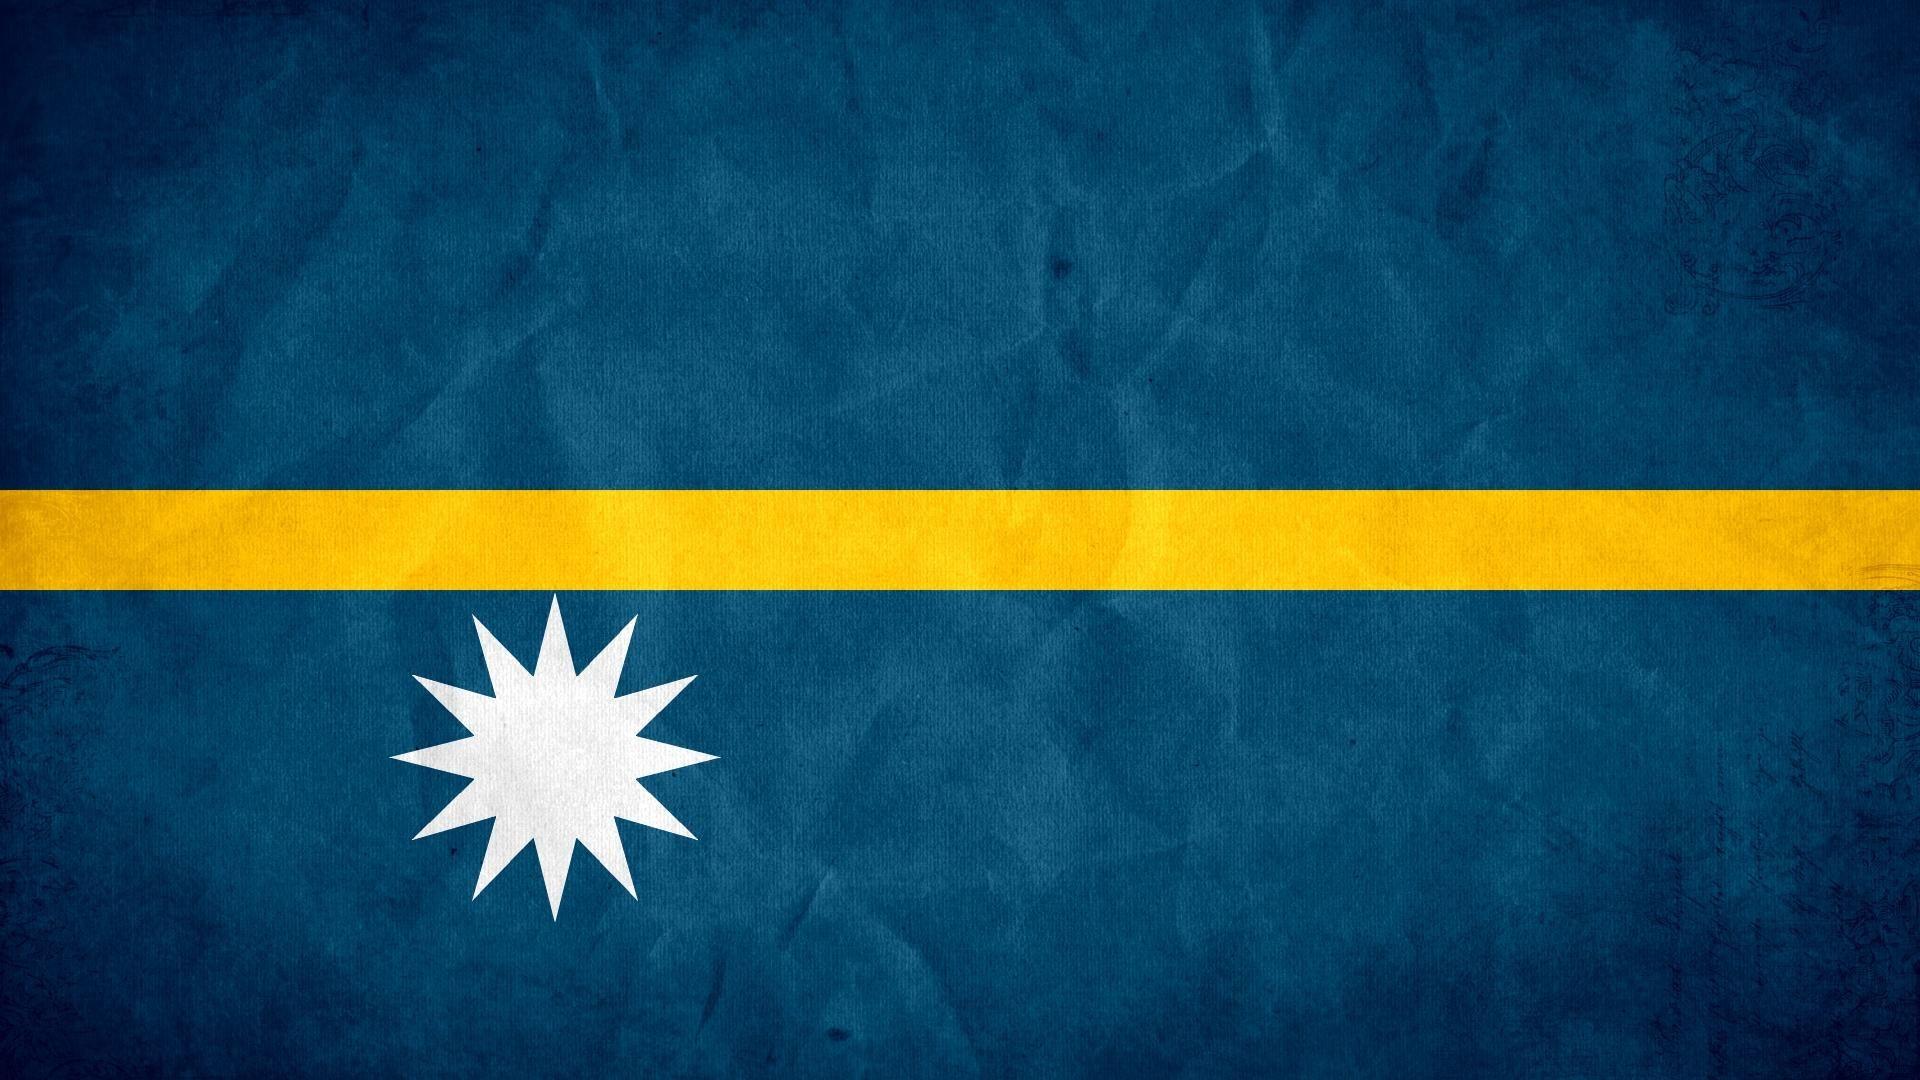 Nauru Flag Wallpaper 52197 1920x1080 px